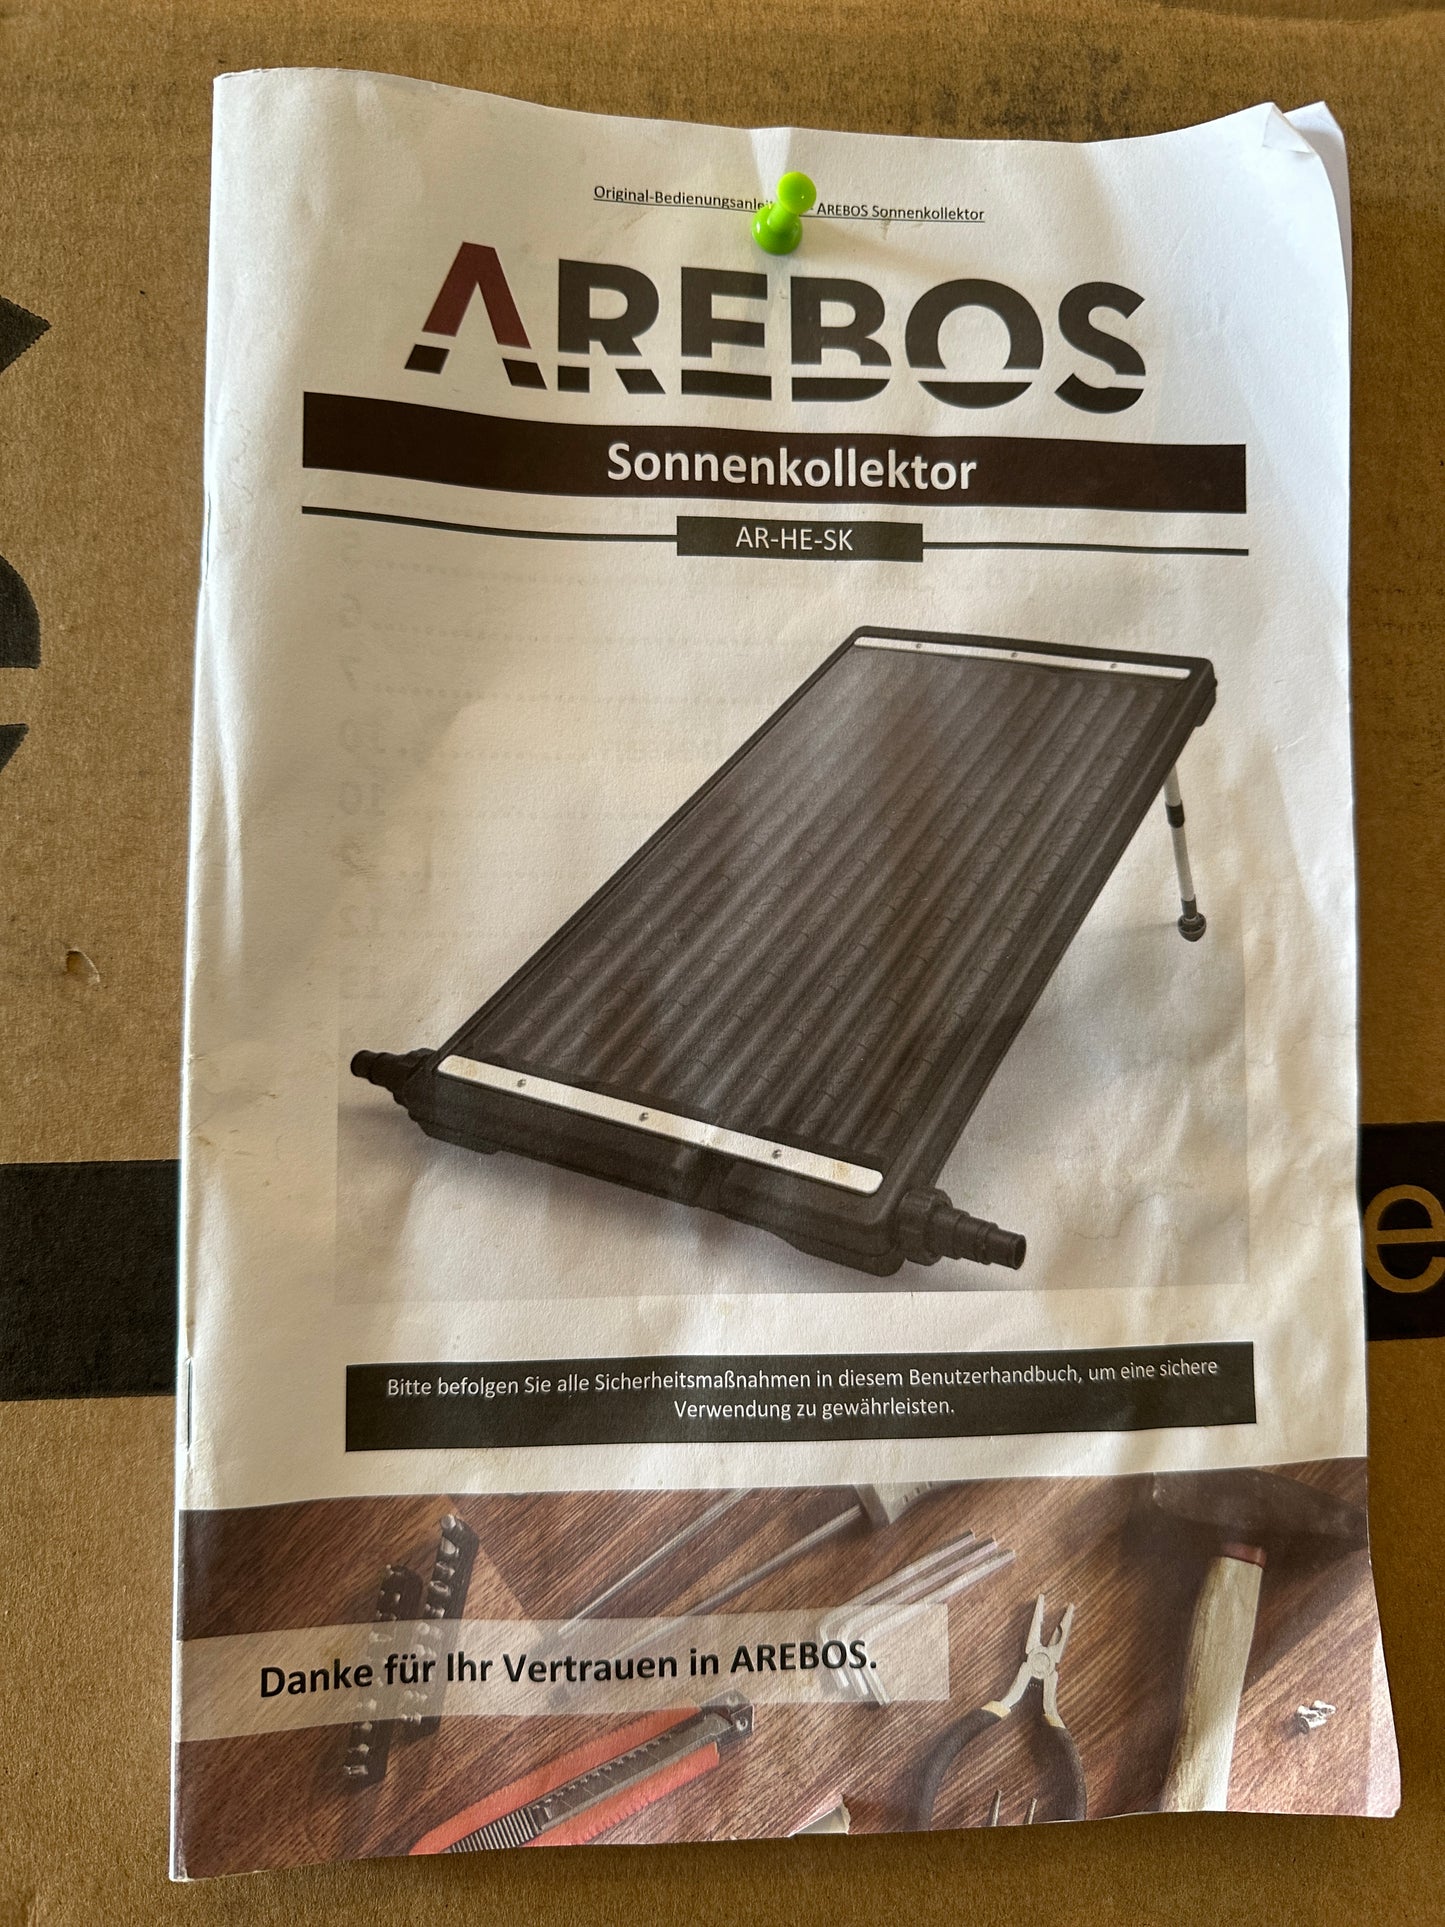 Solarkollektor Poolheizung AR-HE-SK Arebos